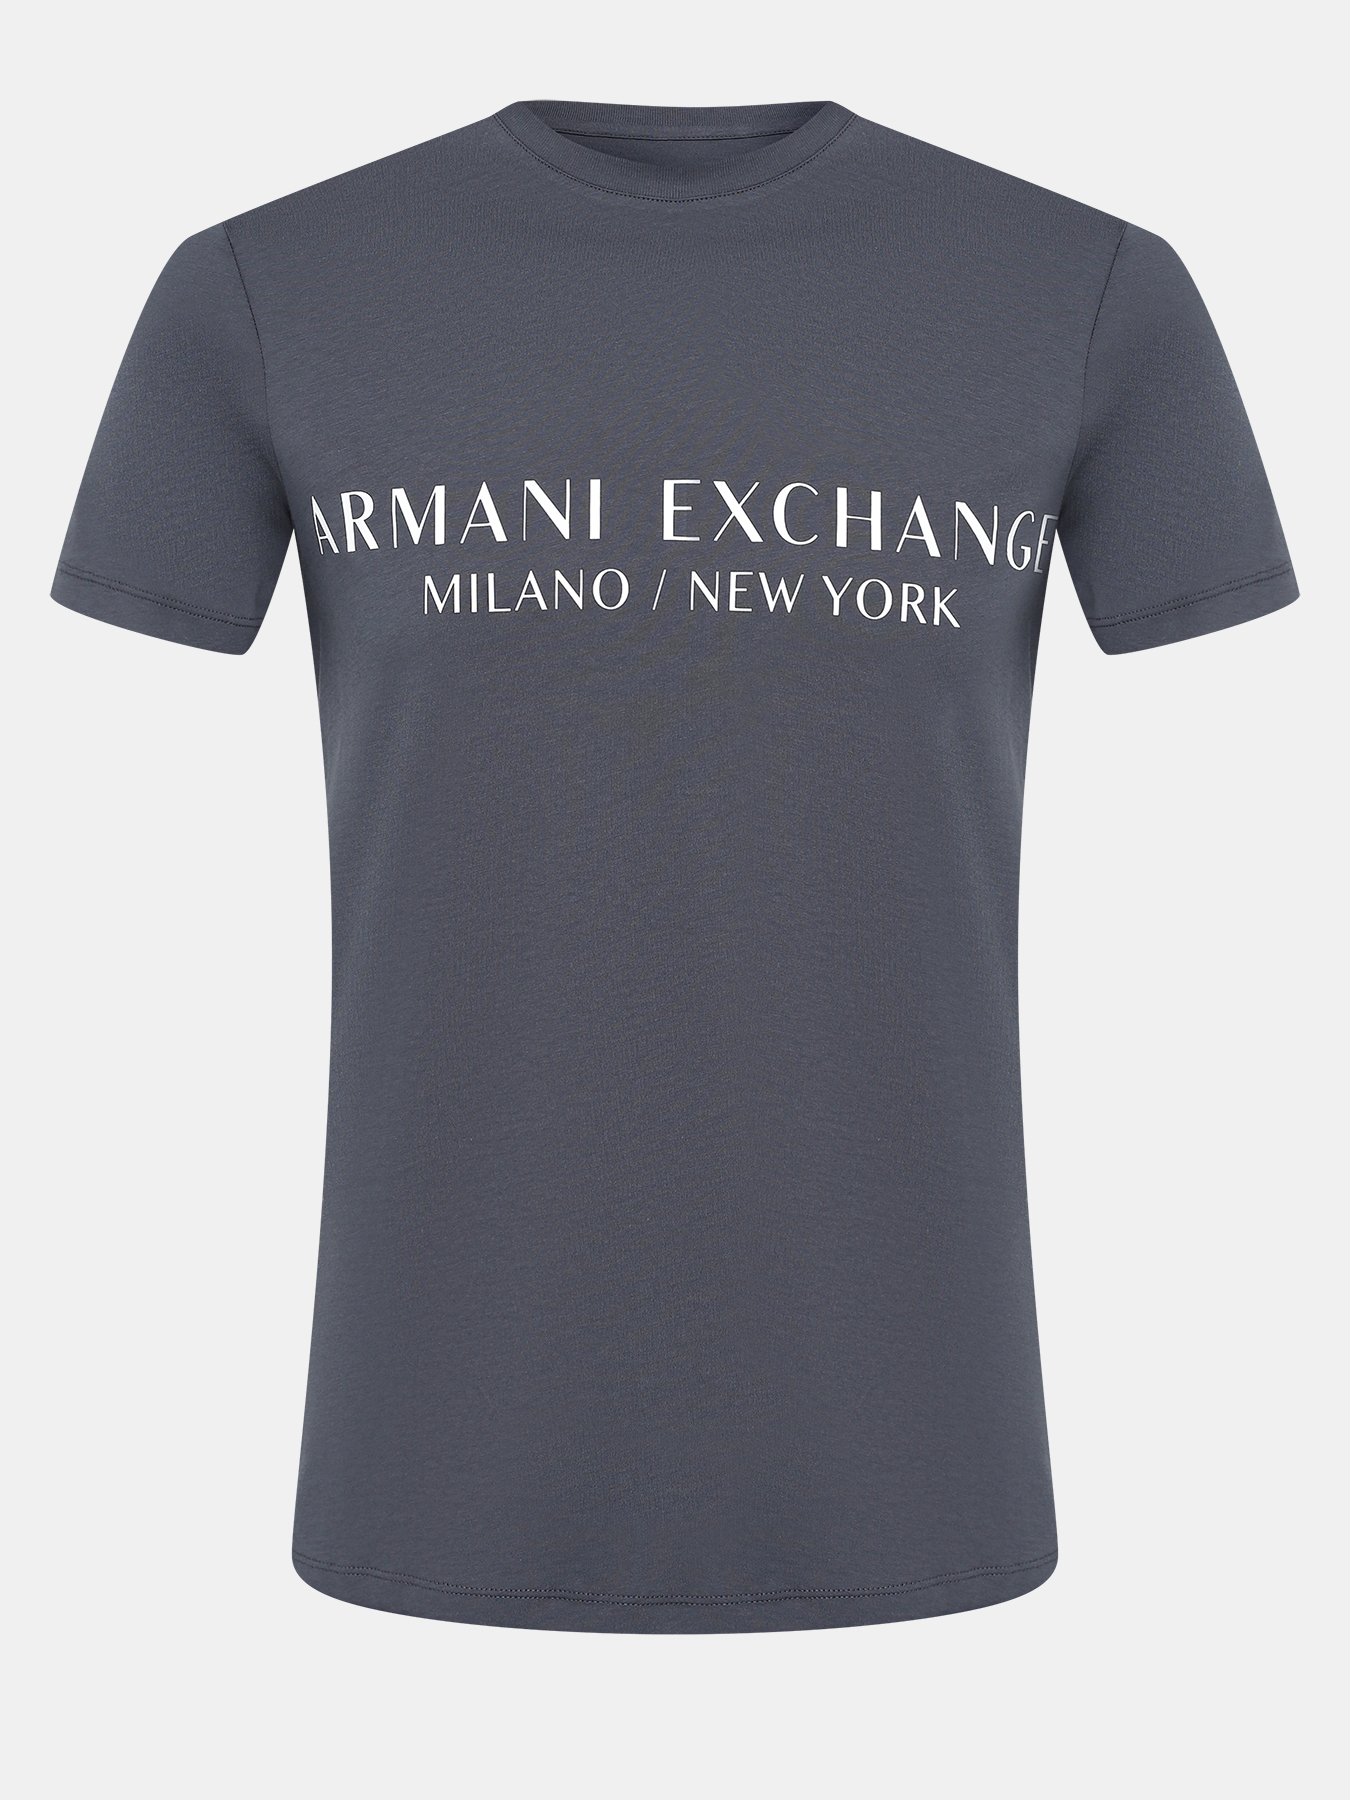 Футболка Armani Exchange 422425-044, цвет темно-серый, размер 50-52 - фото 1